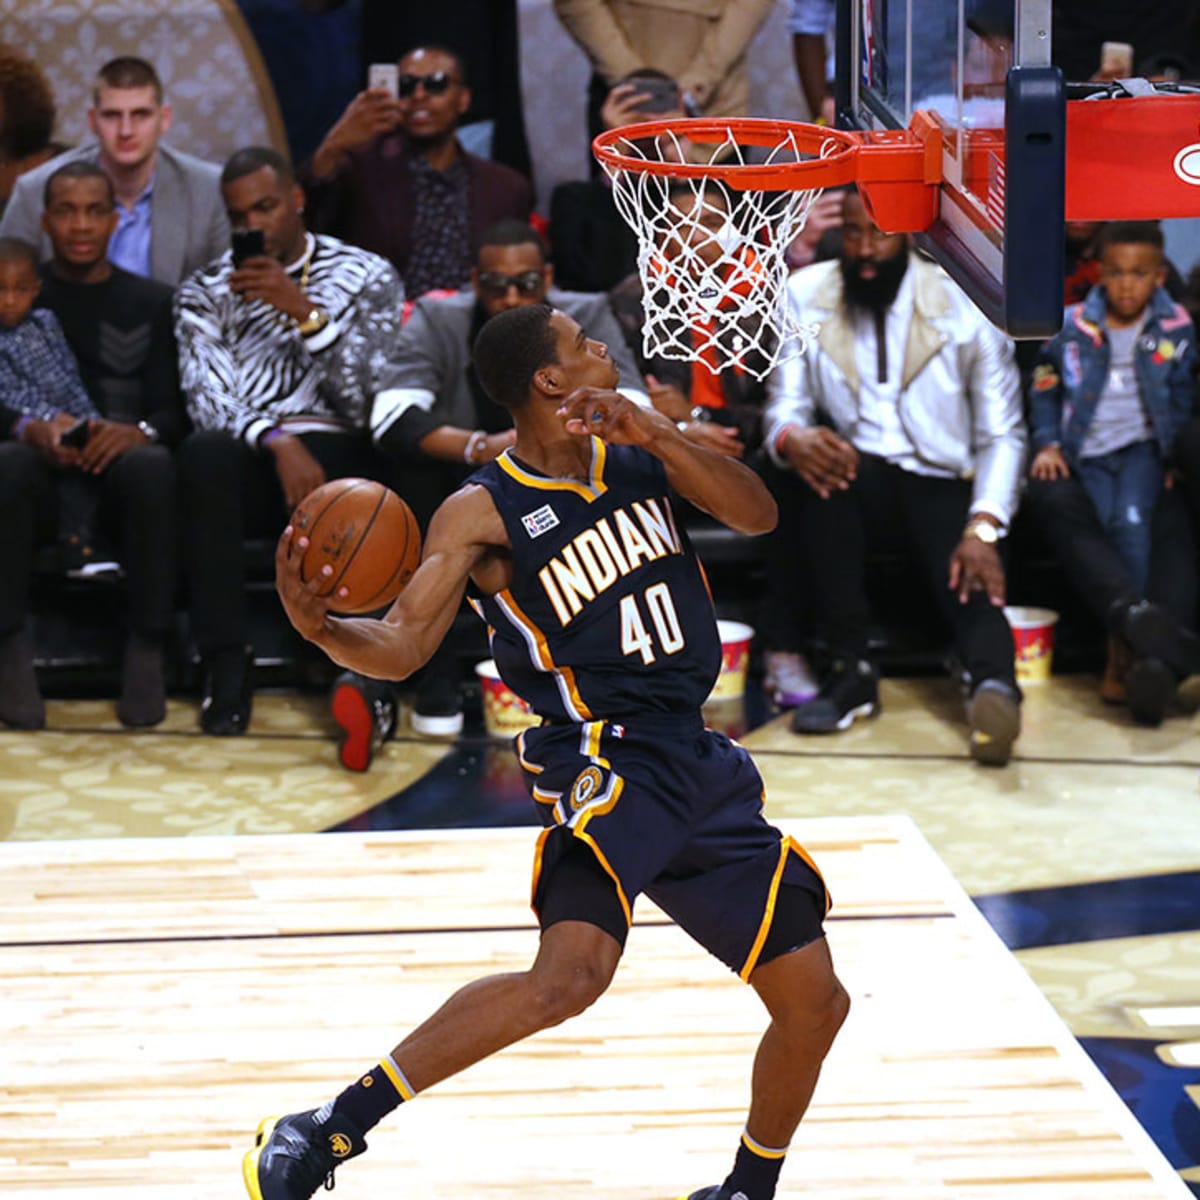 NBA slam dunk contest live stream Watch online, TV, time